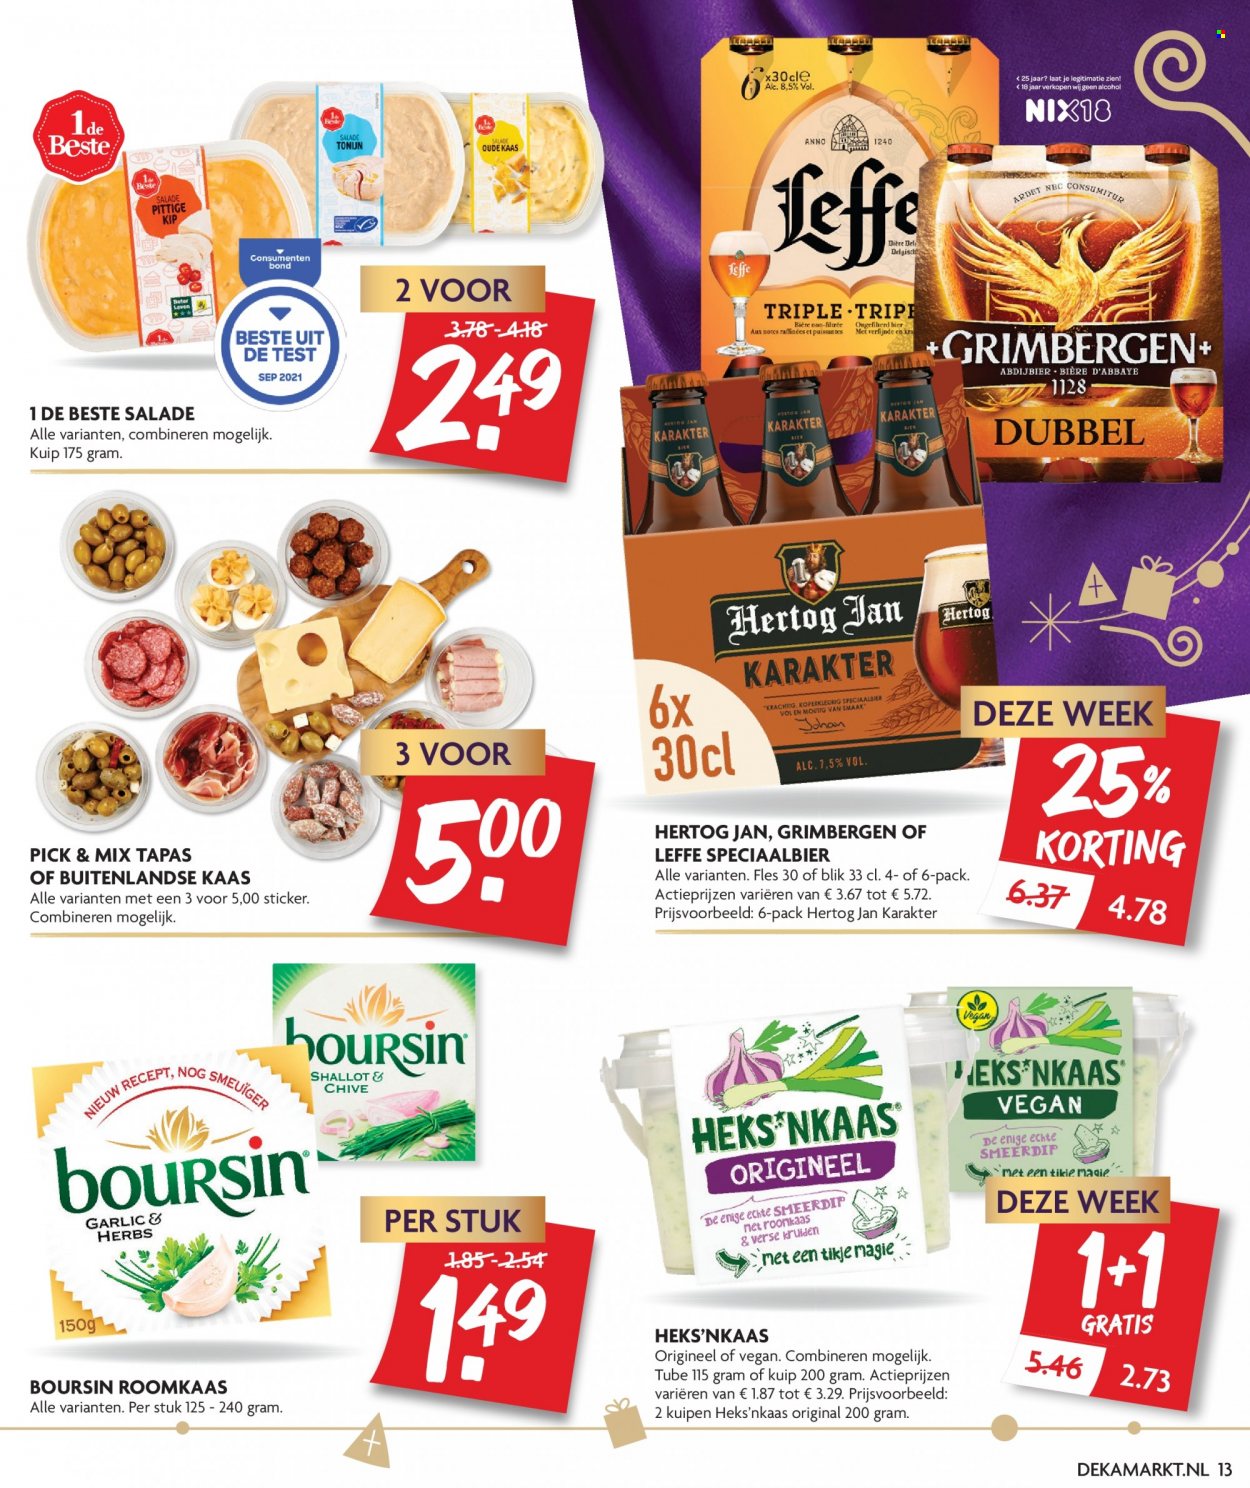 thumbnail - DekaMarkt-aanbieding - 28-11-2021 - 4-12-2021 -  producten in de aanbieding - Leffe, Hertog Jan, tapas, Heks'nkaas, Boursin, kaas, oude kaas, roomkaas. Pagina 13.